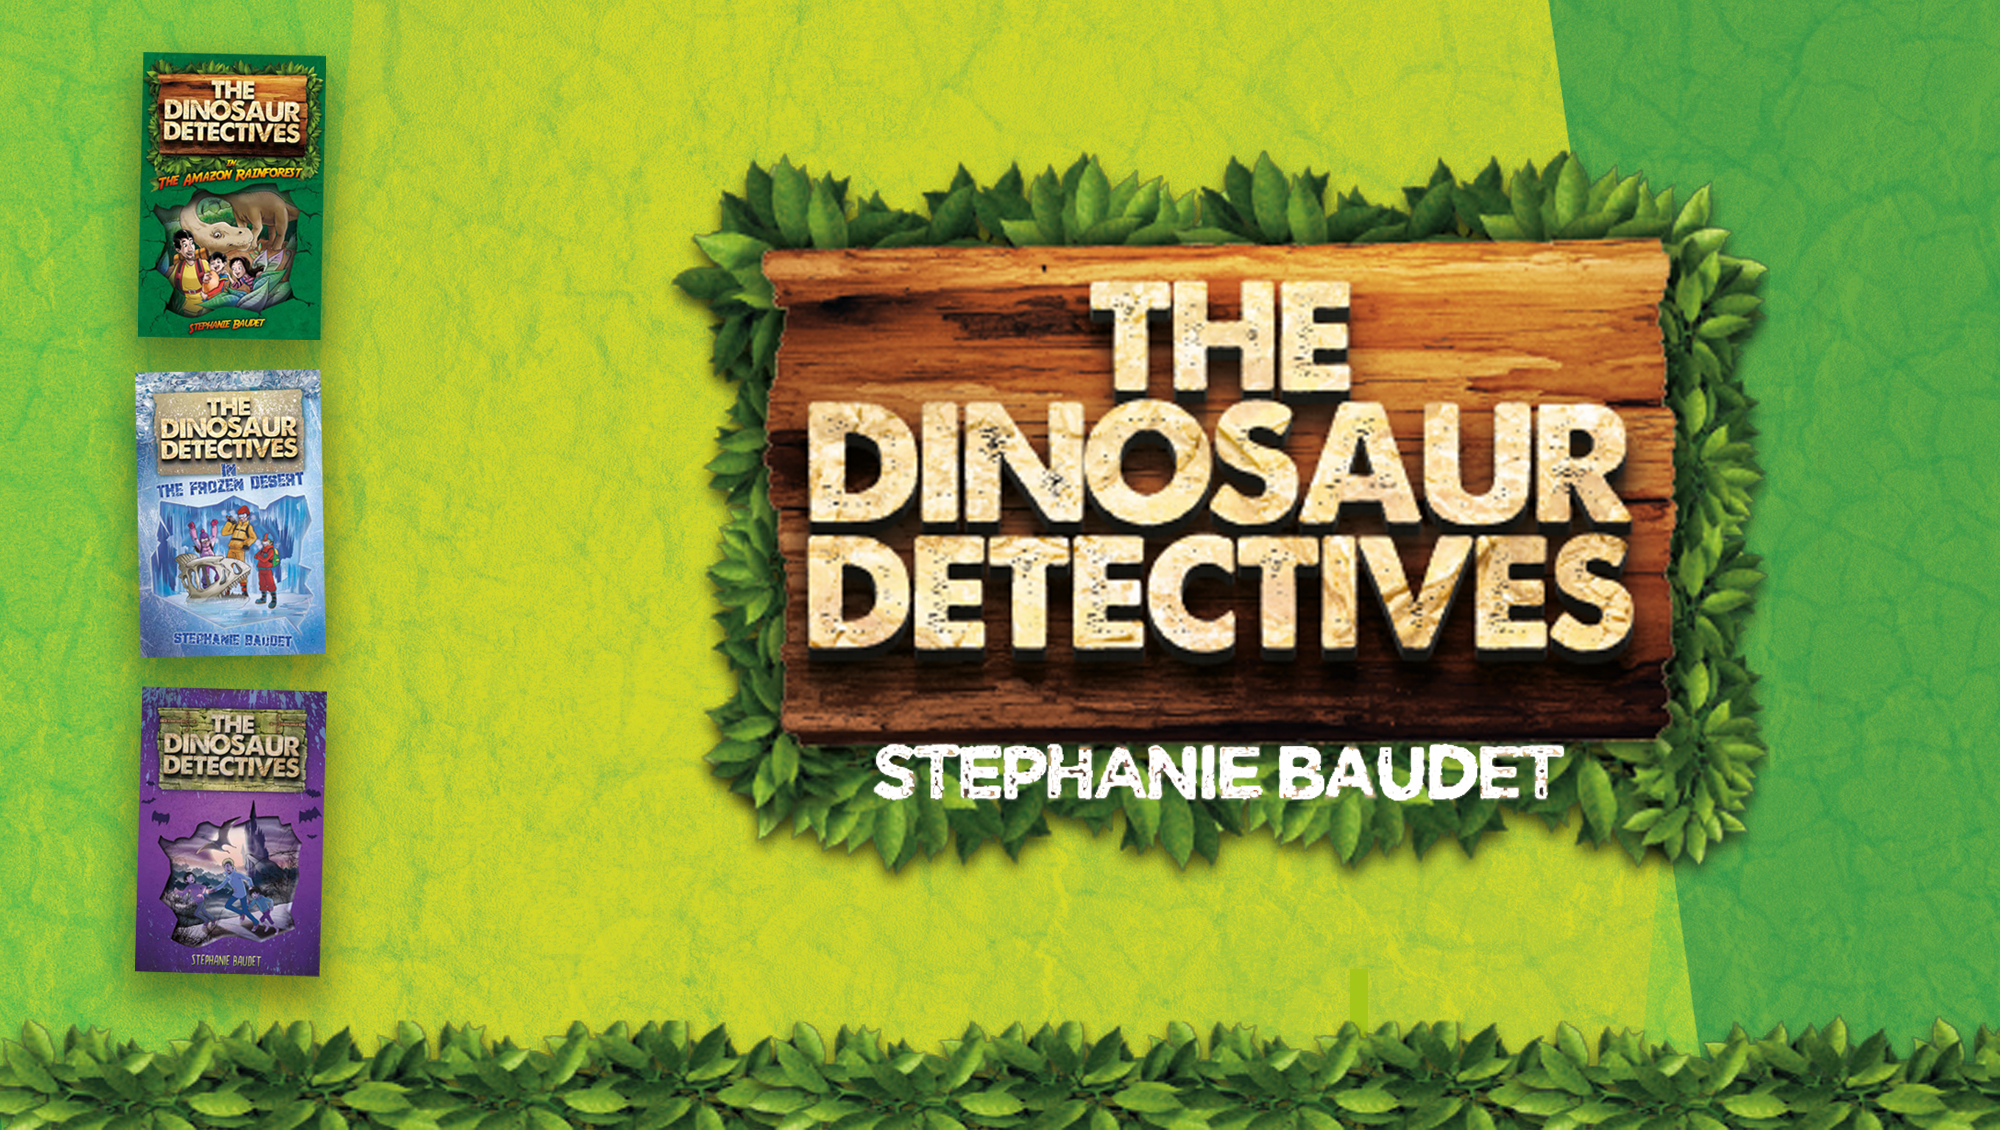 The Dinosaur Detectives